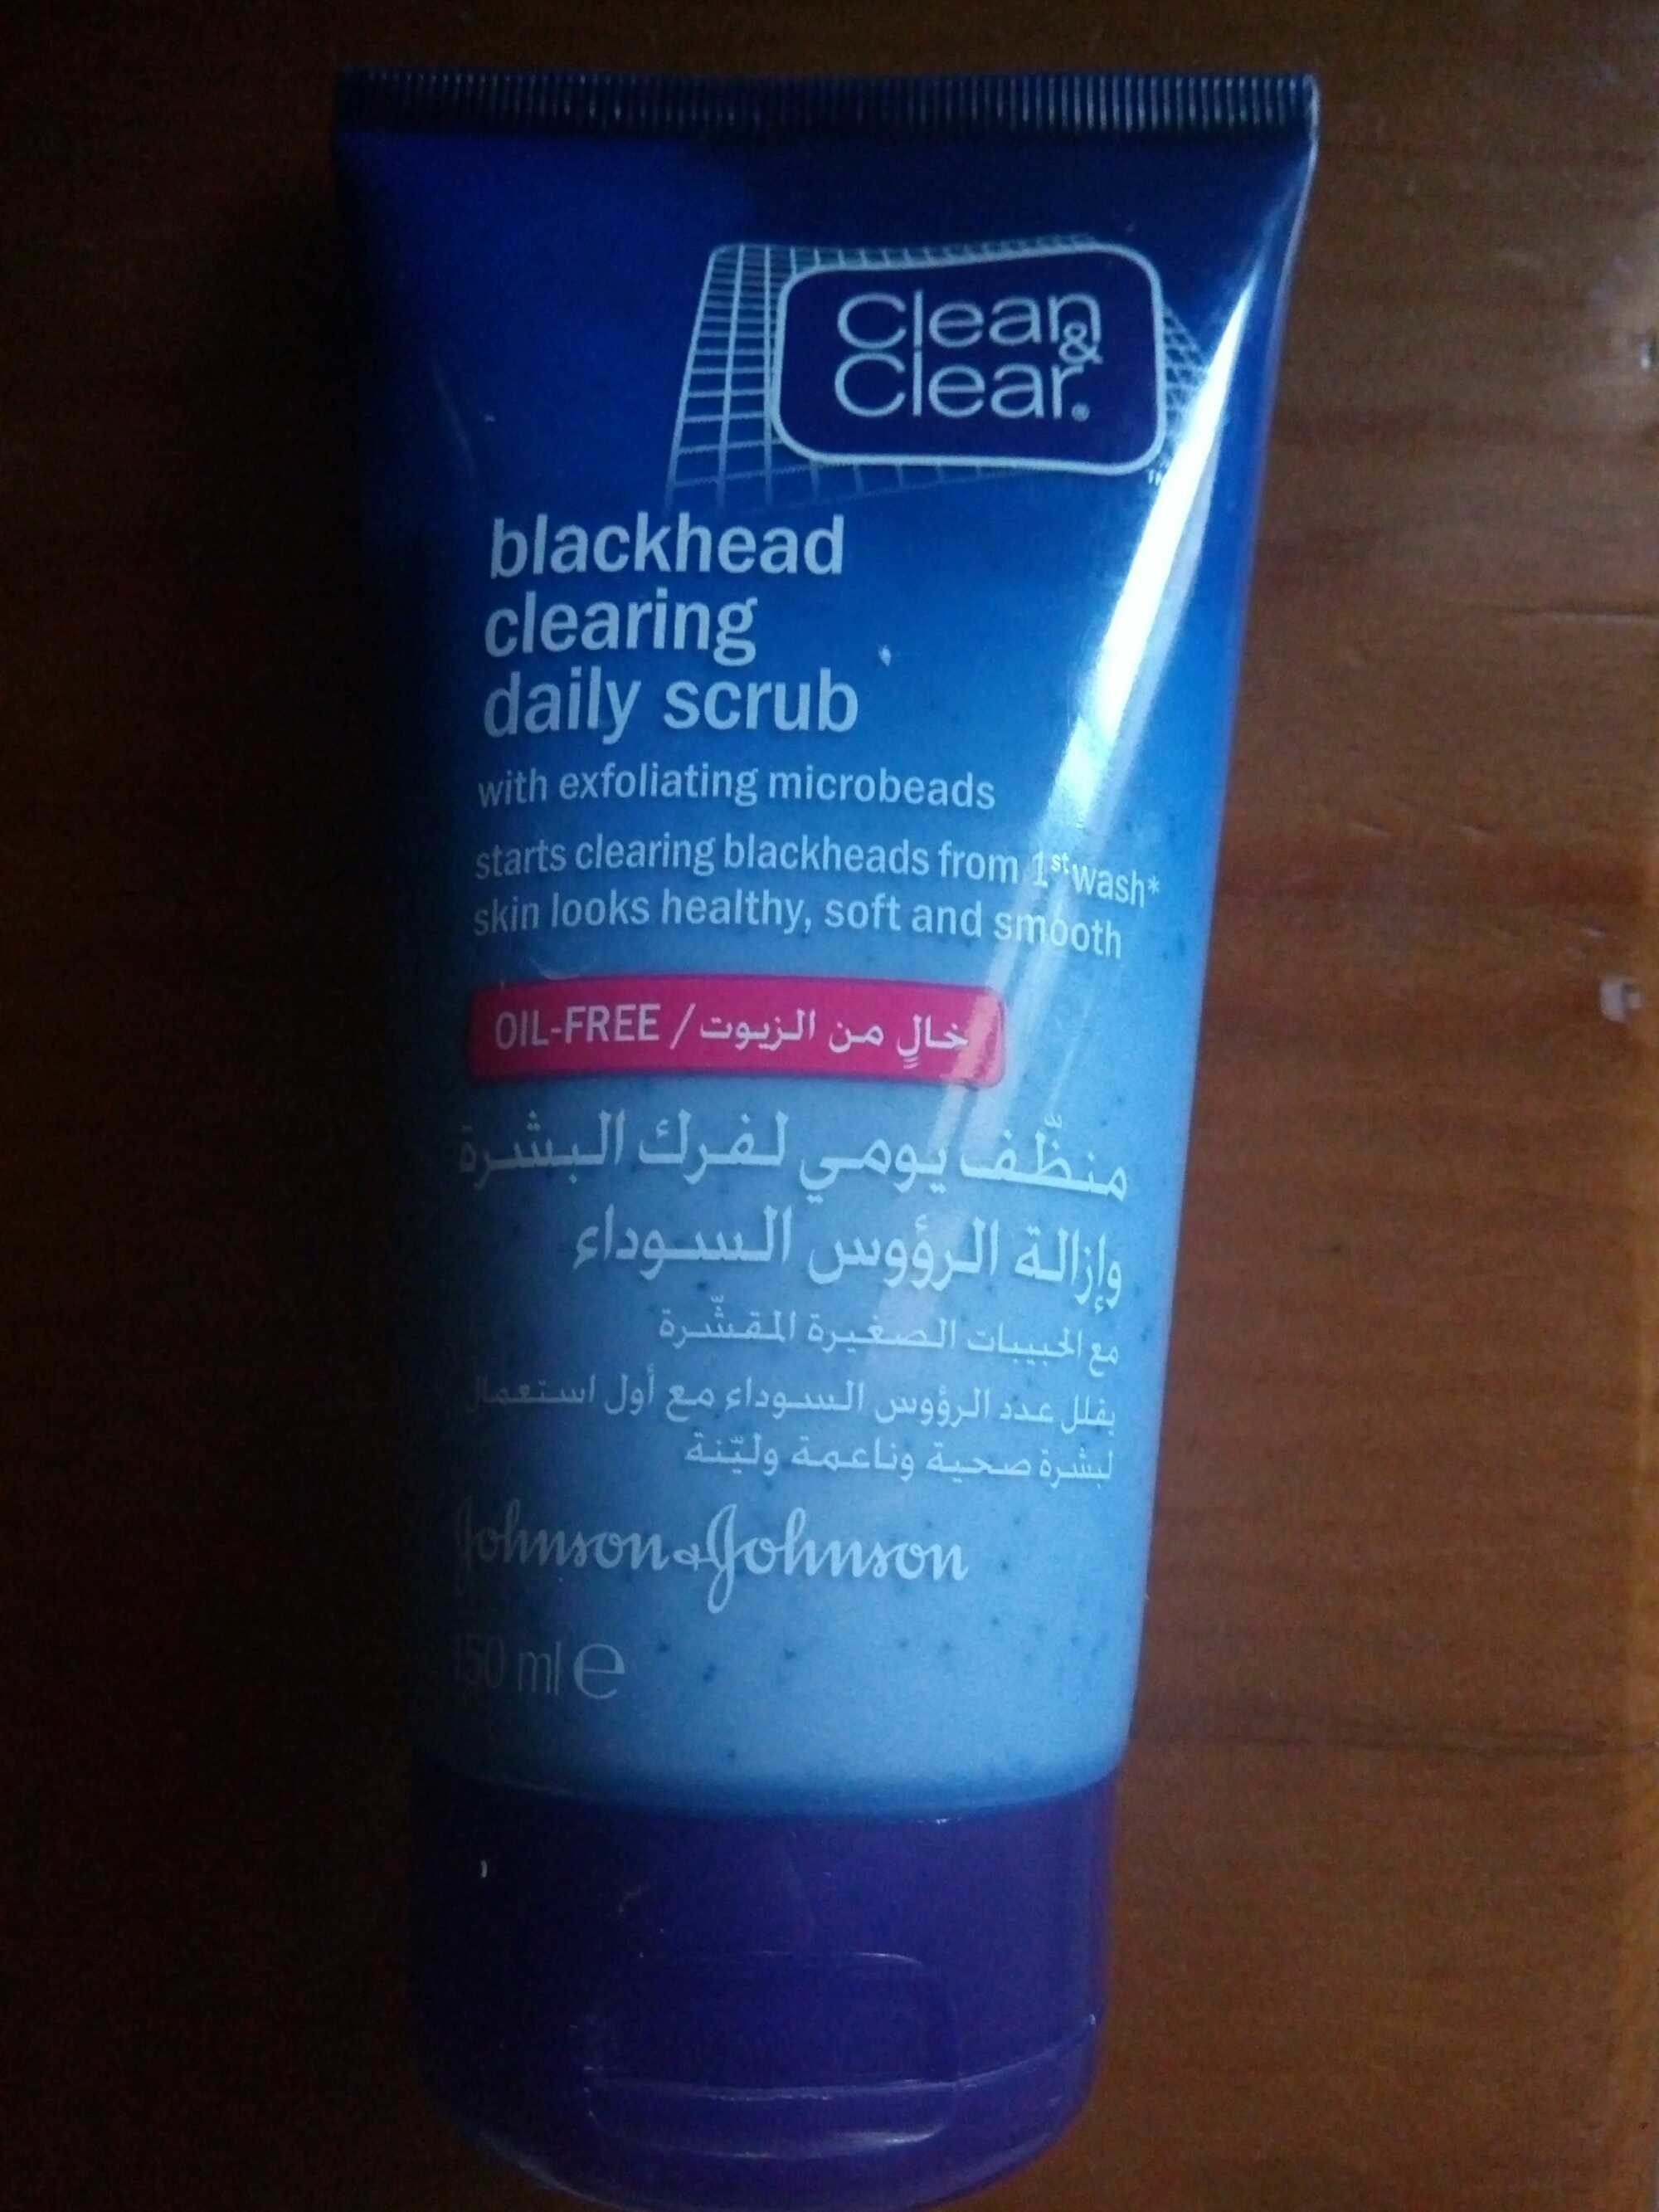 Blackhead clearing daily scrub - Product - fr